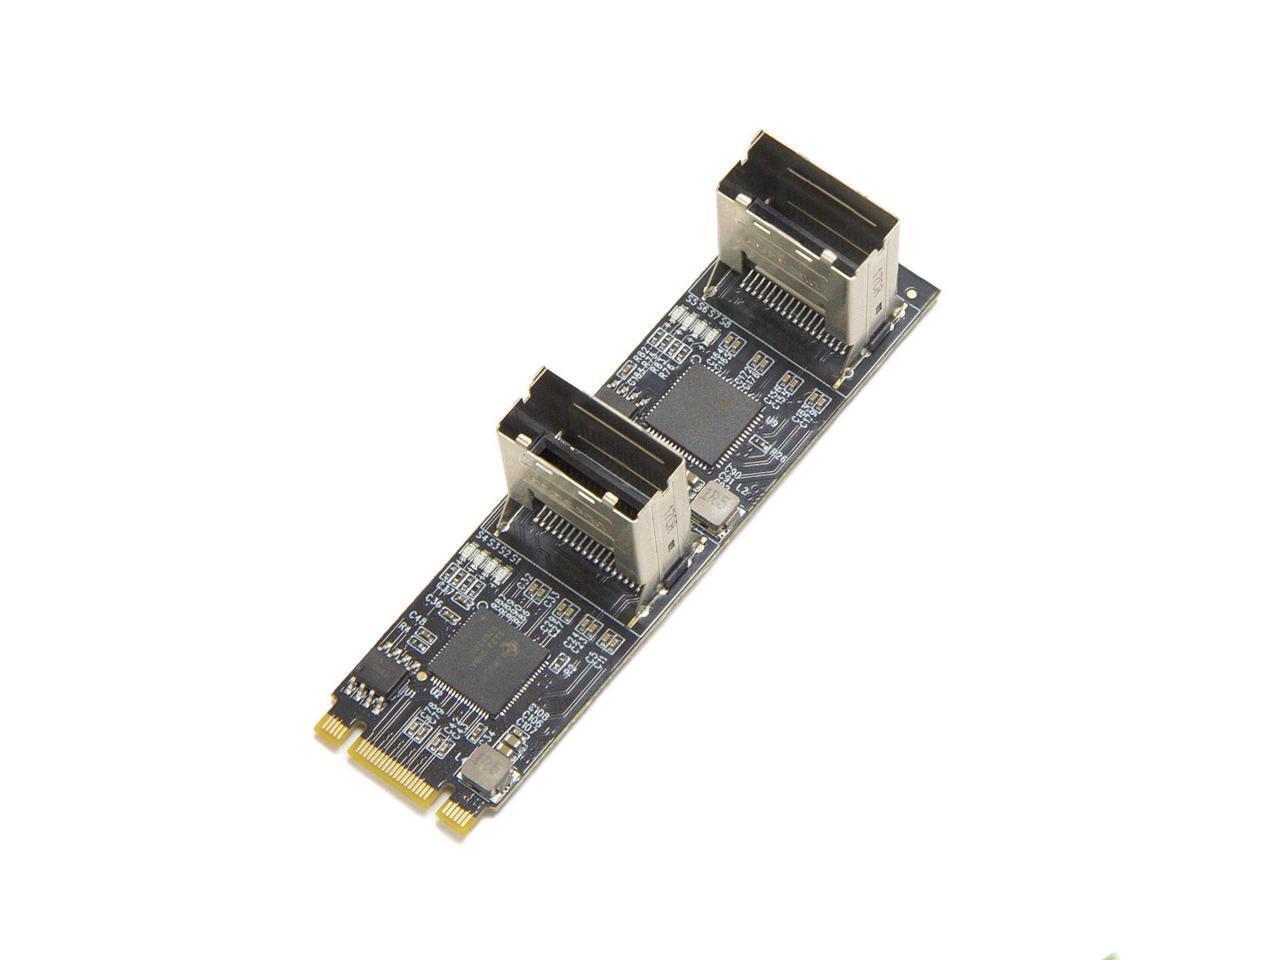 Syba 8 port Non-RAID SATA III 6Gbp/s to M.2 B+M Key Adapter PCI-e 3.0 x2